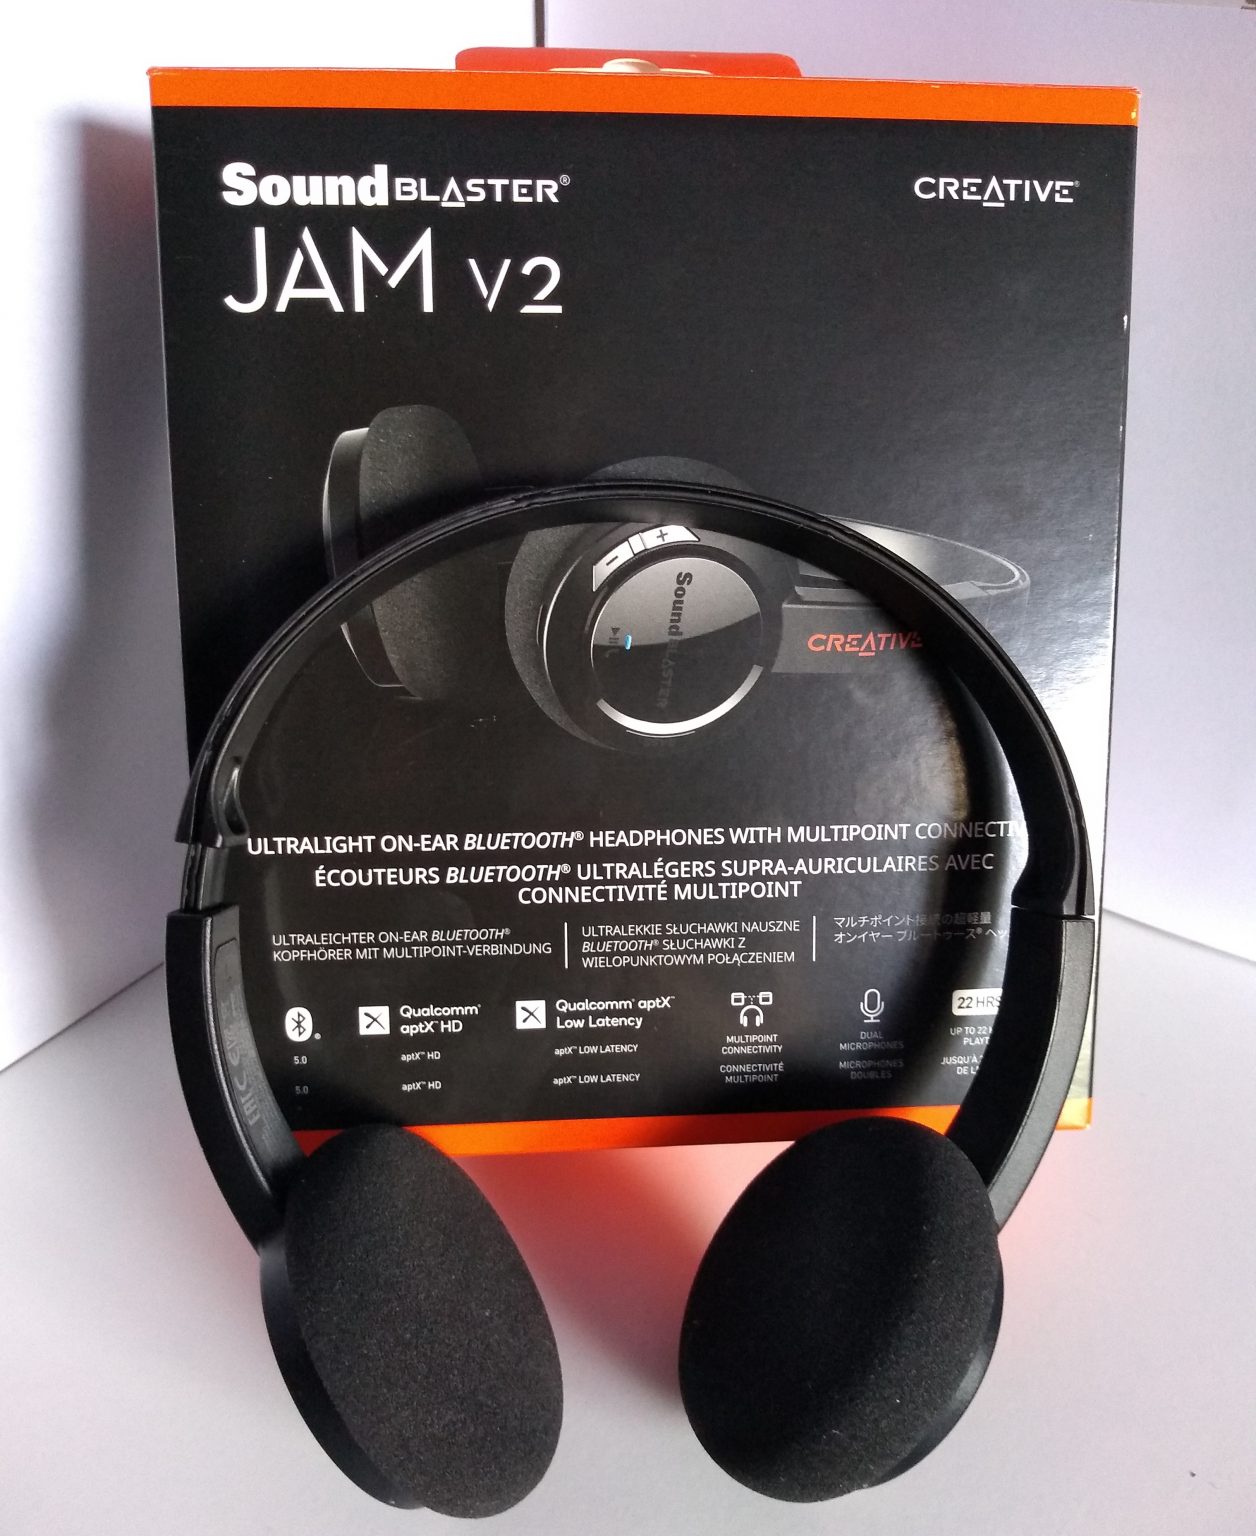 Creative Sound Blaster Jam v2. Creative jam v2